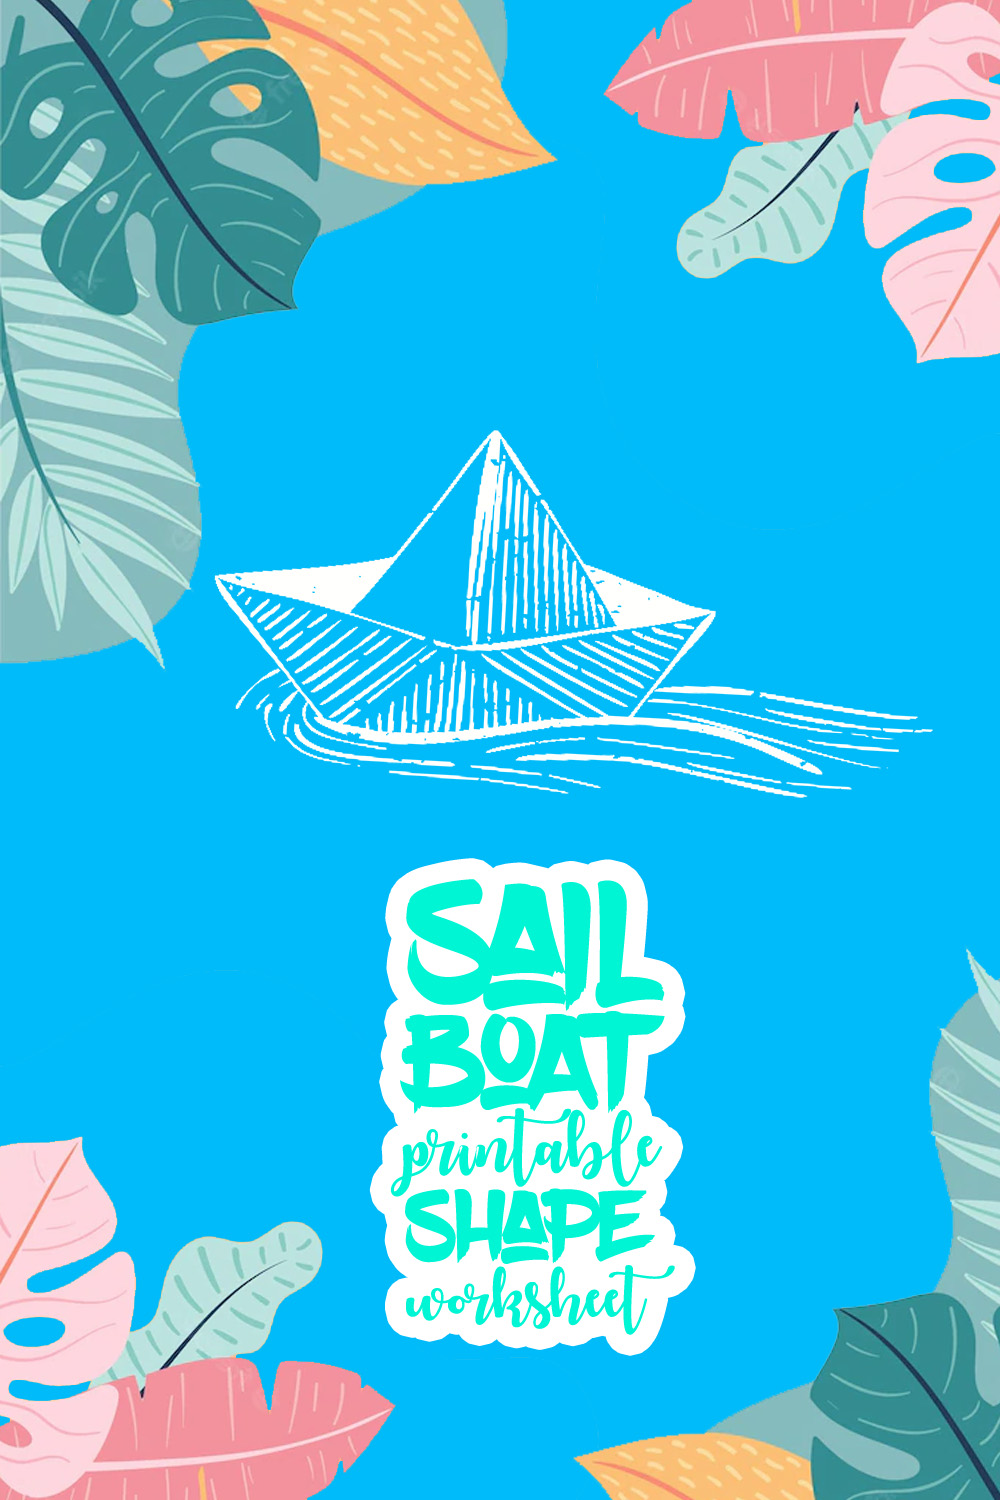 12 Images of Sail Boat Printable Shapes Worksheets